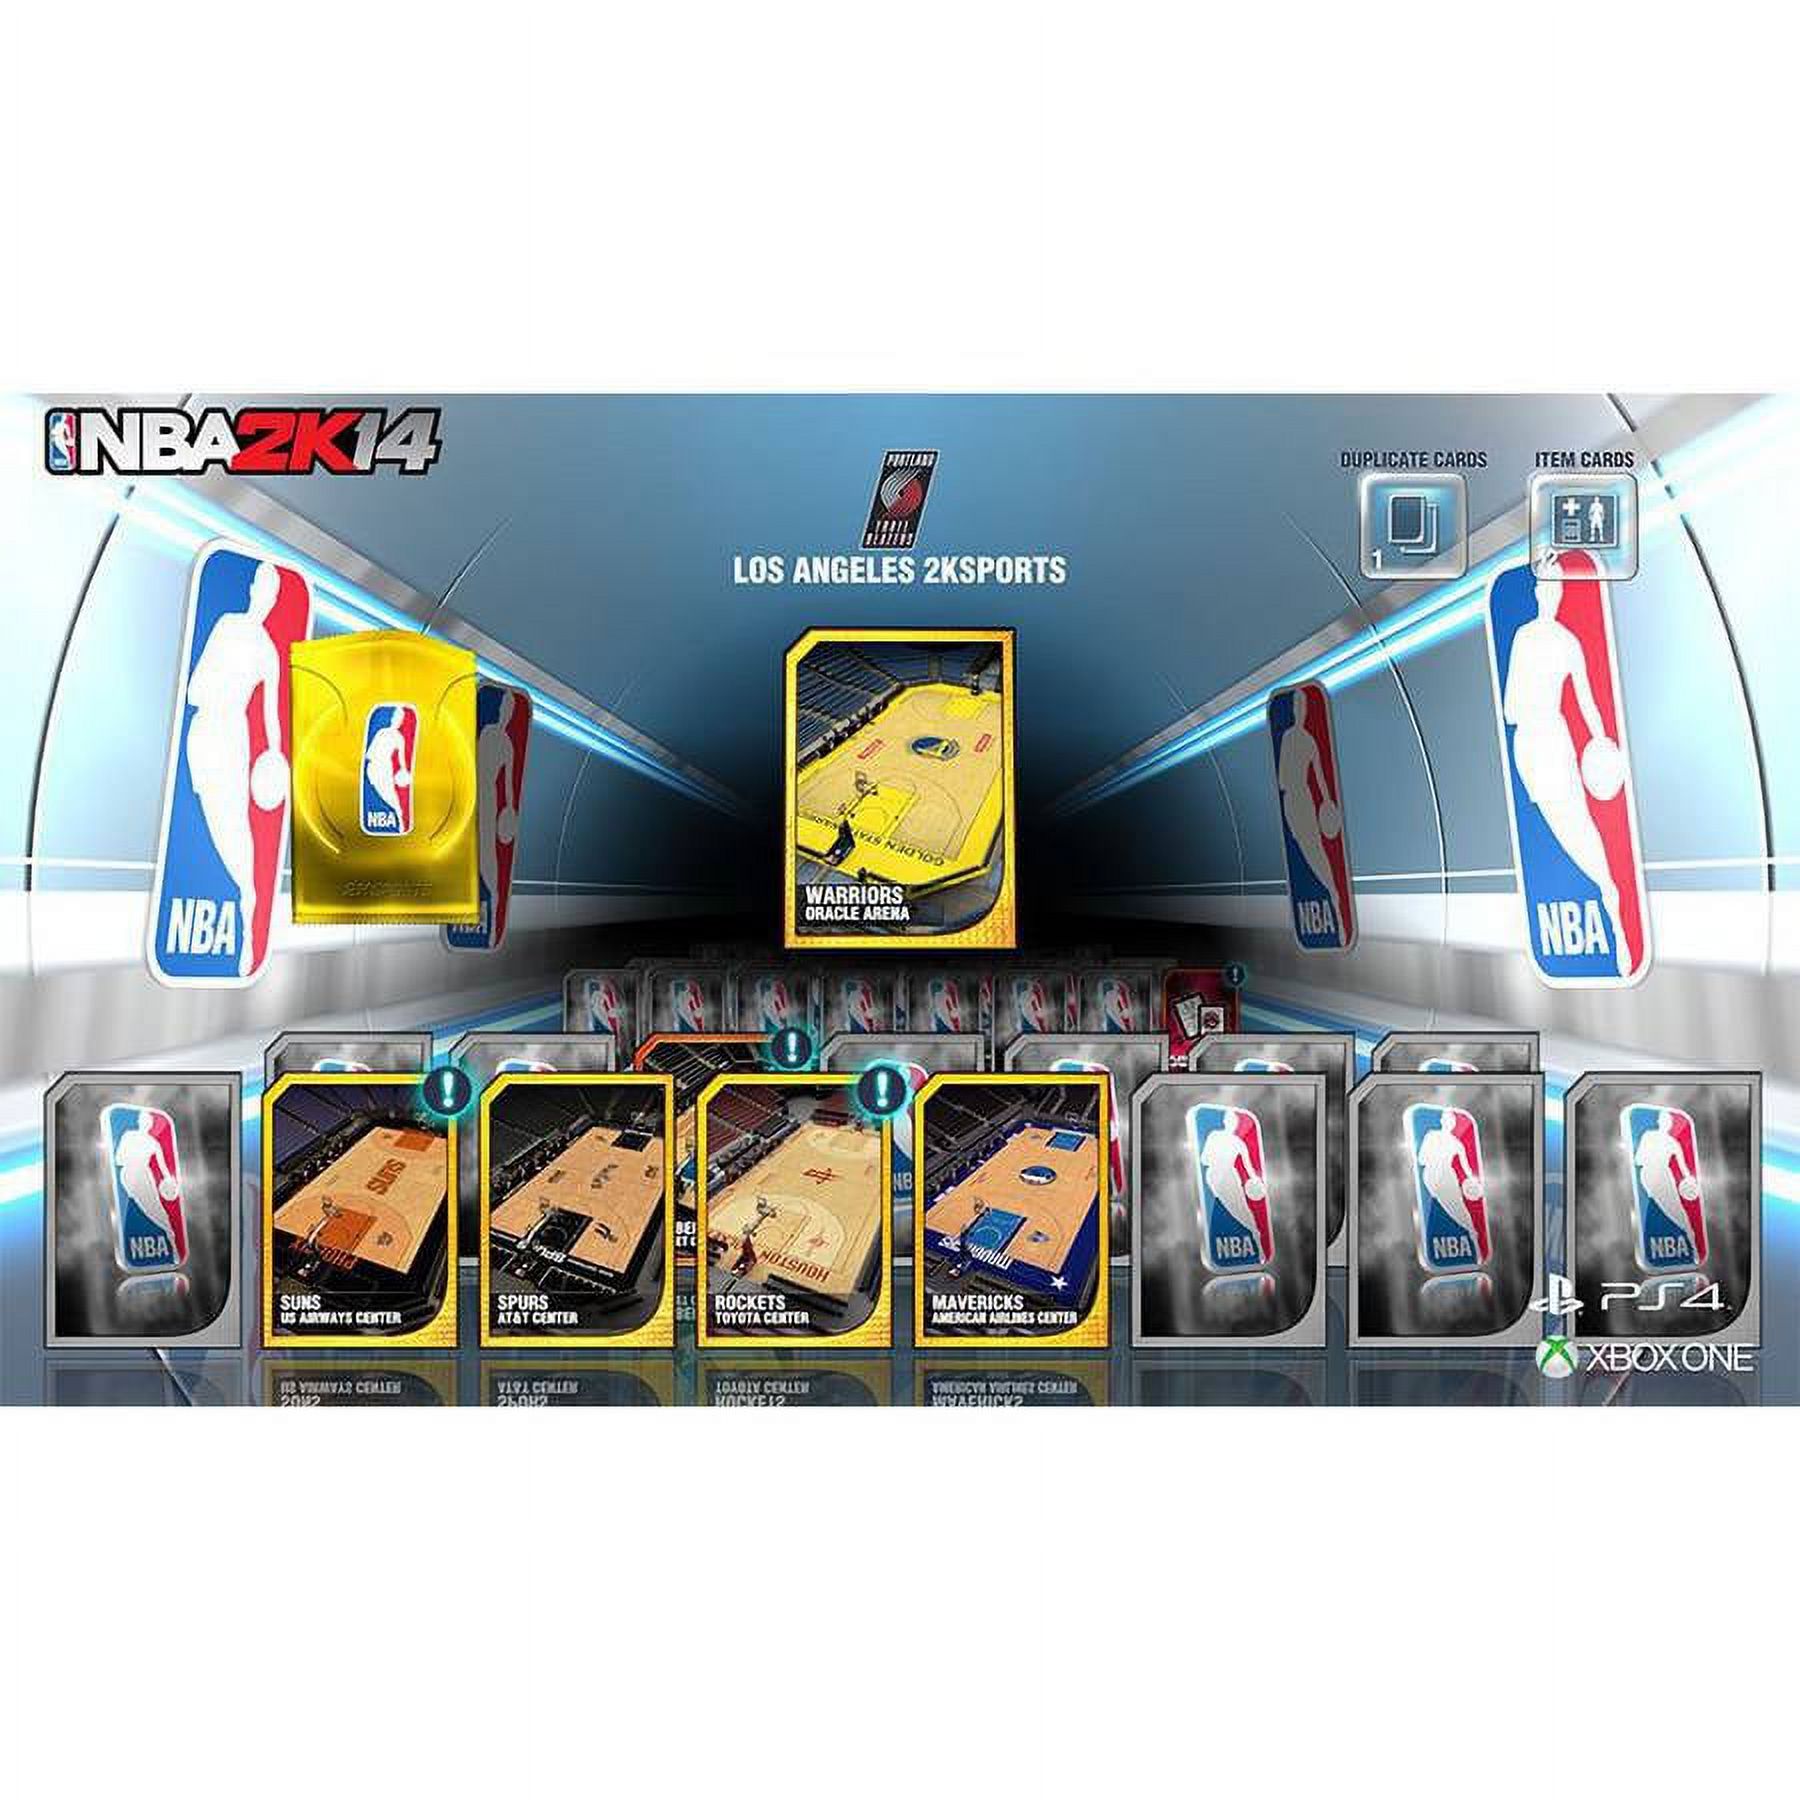 NBA 2K14, 2K, Xbox One, 710425493072 - image 5 of 6